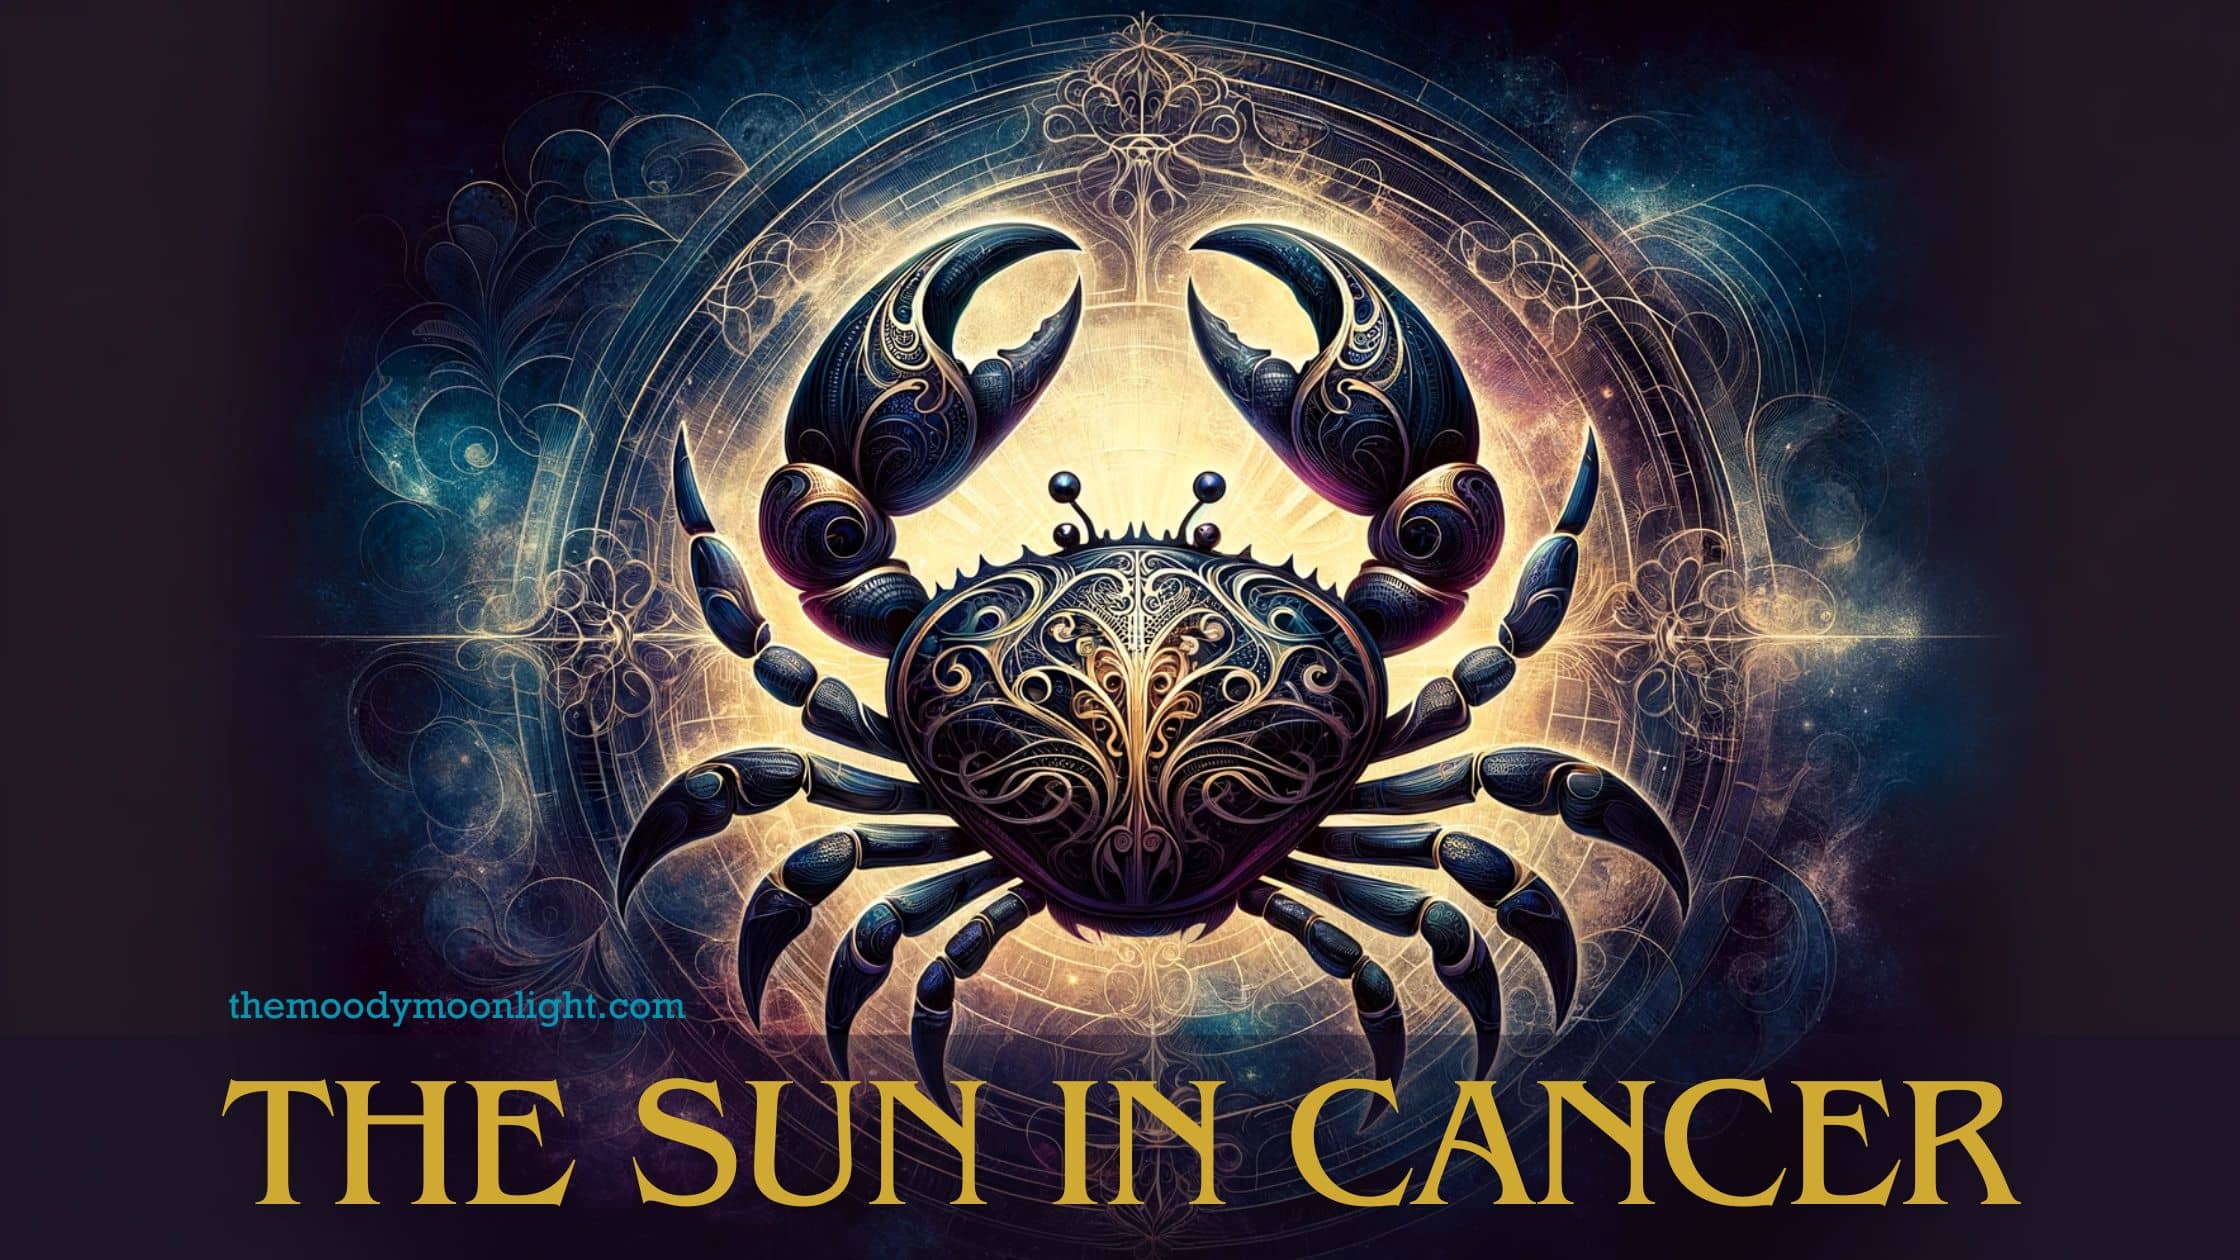 The sun in cancer